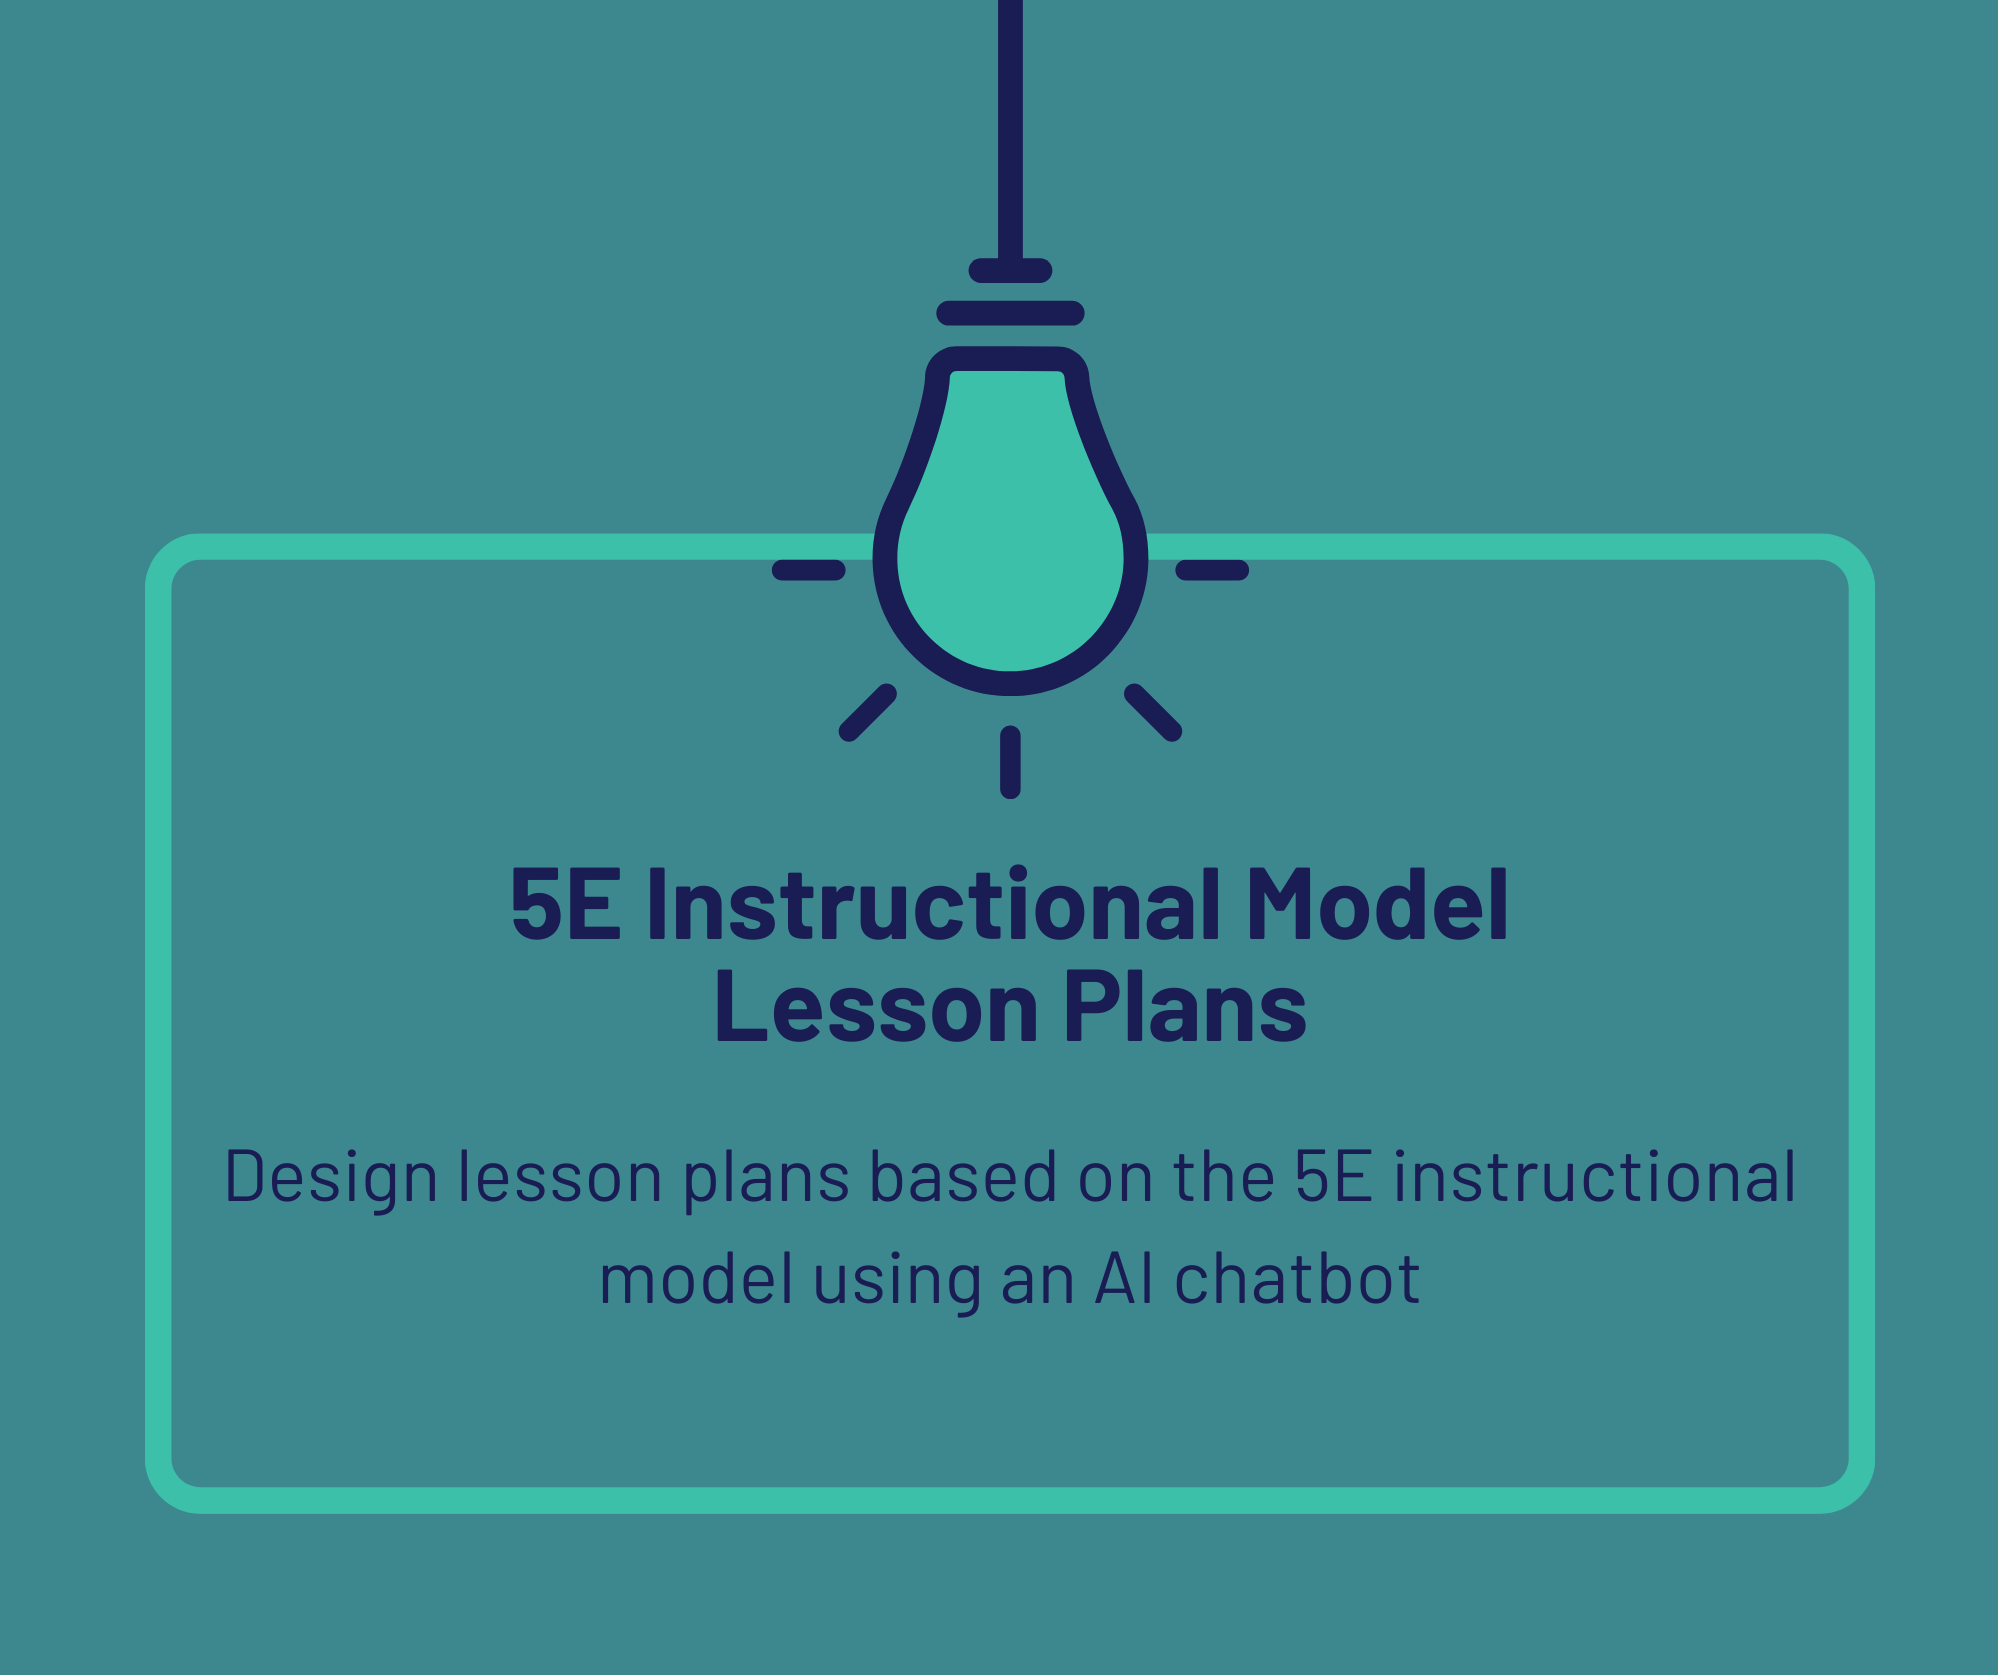 5E Instructional Model Lesson Plans Using an AI Chatbot